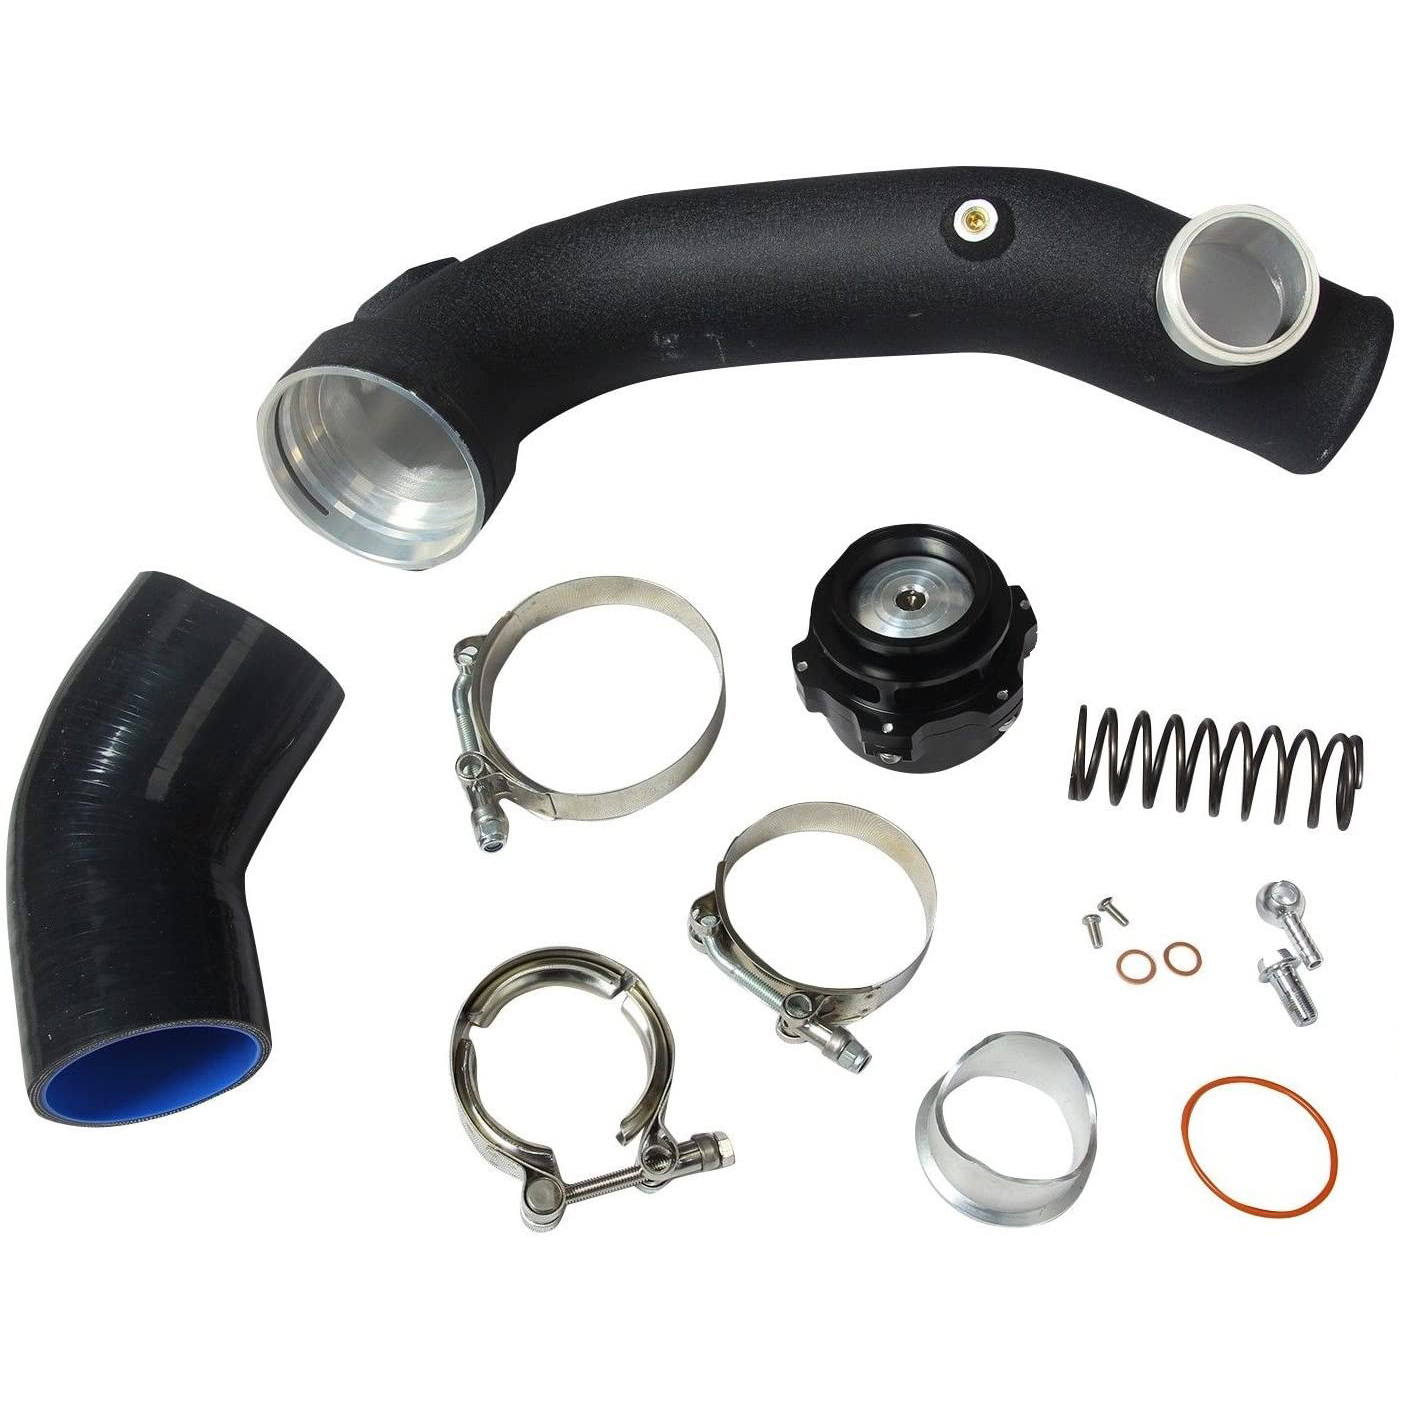 OEM Egine Air Intake Pipe Supplier –  Racing Intake Turbo Charge Pipe Kit w/ Tial & 50mm Bov For BMW N54 E88 E90 E92 135i 335i – Yibai